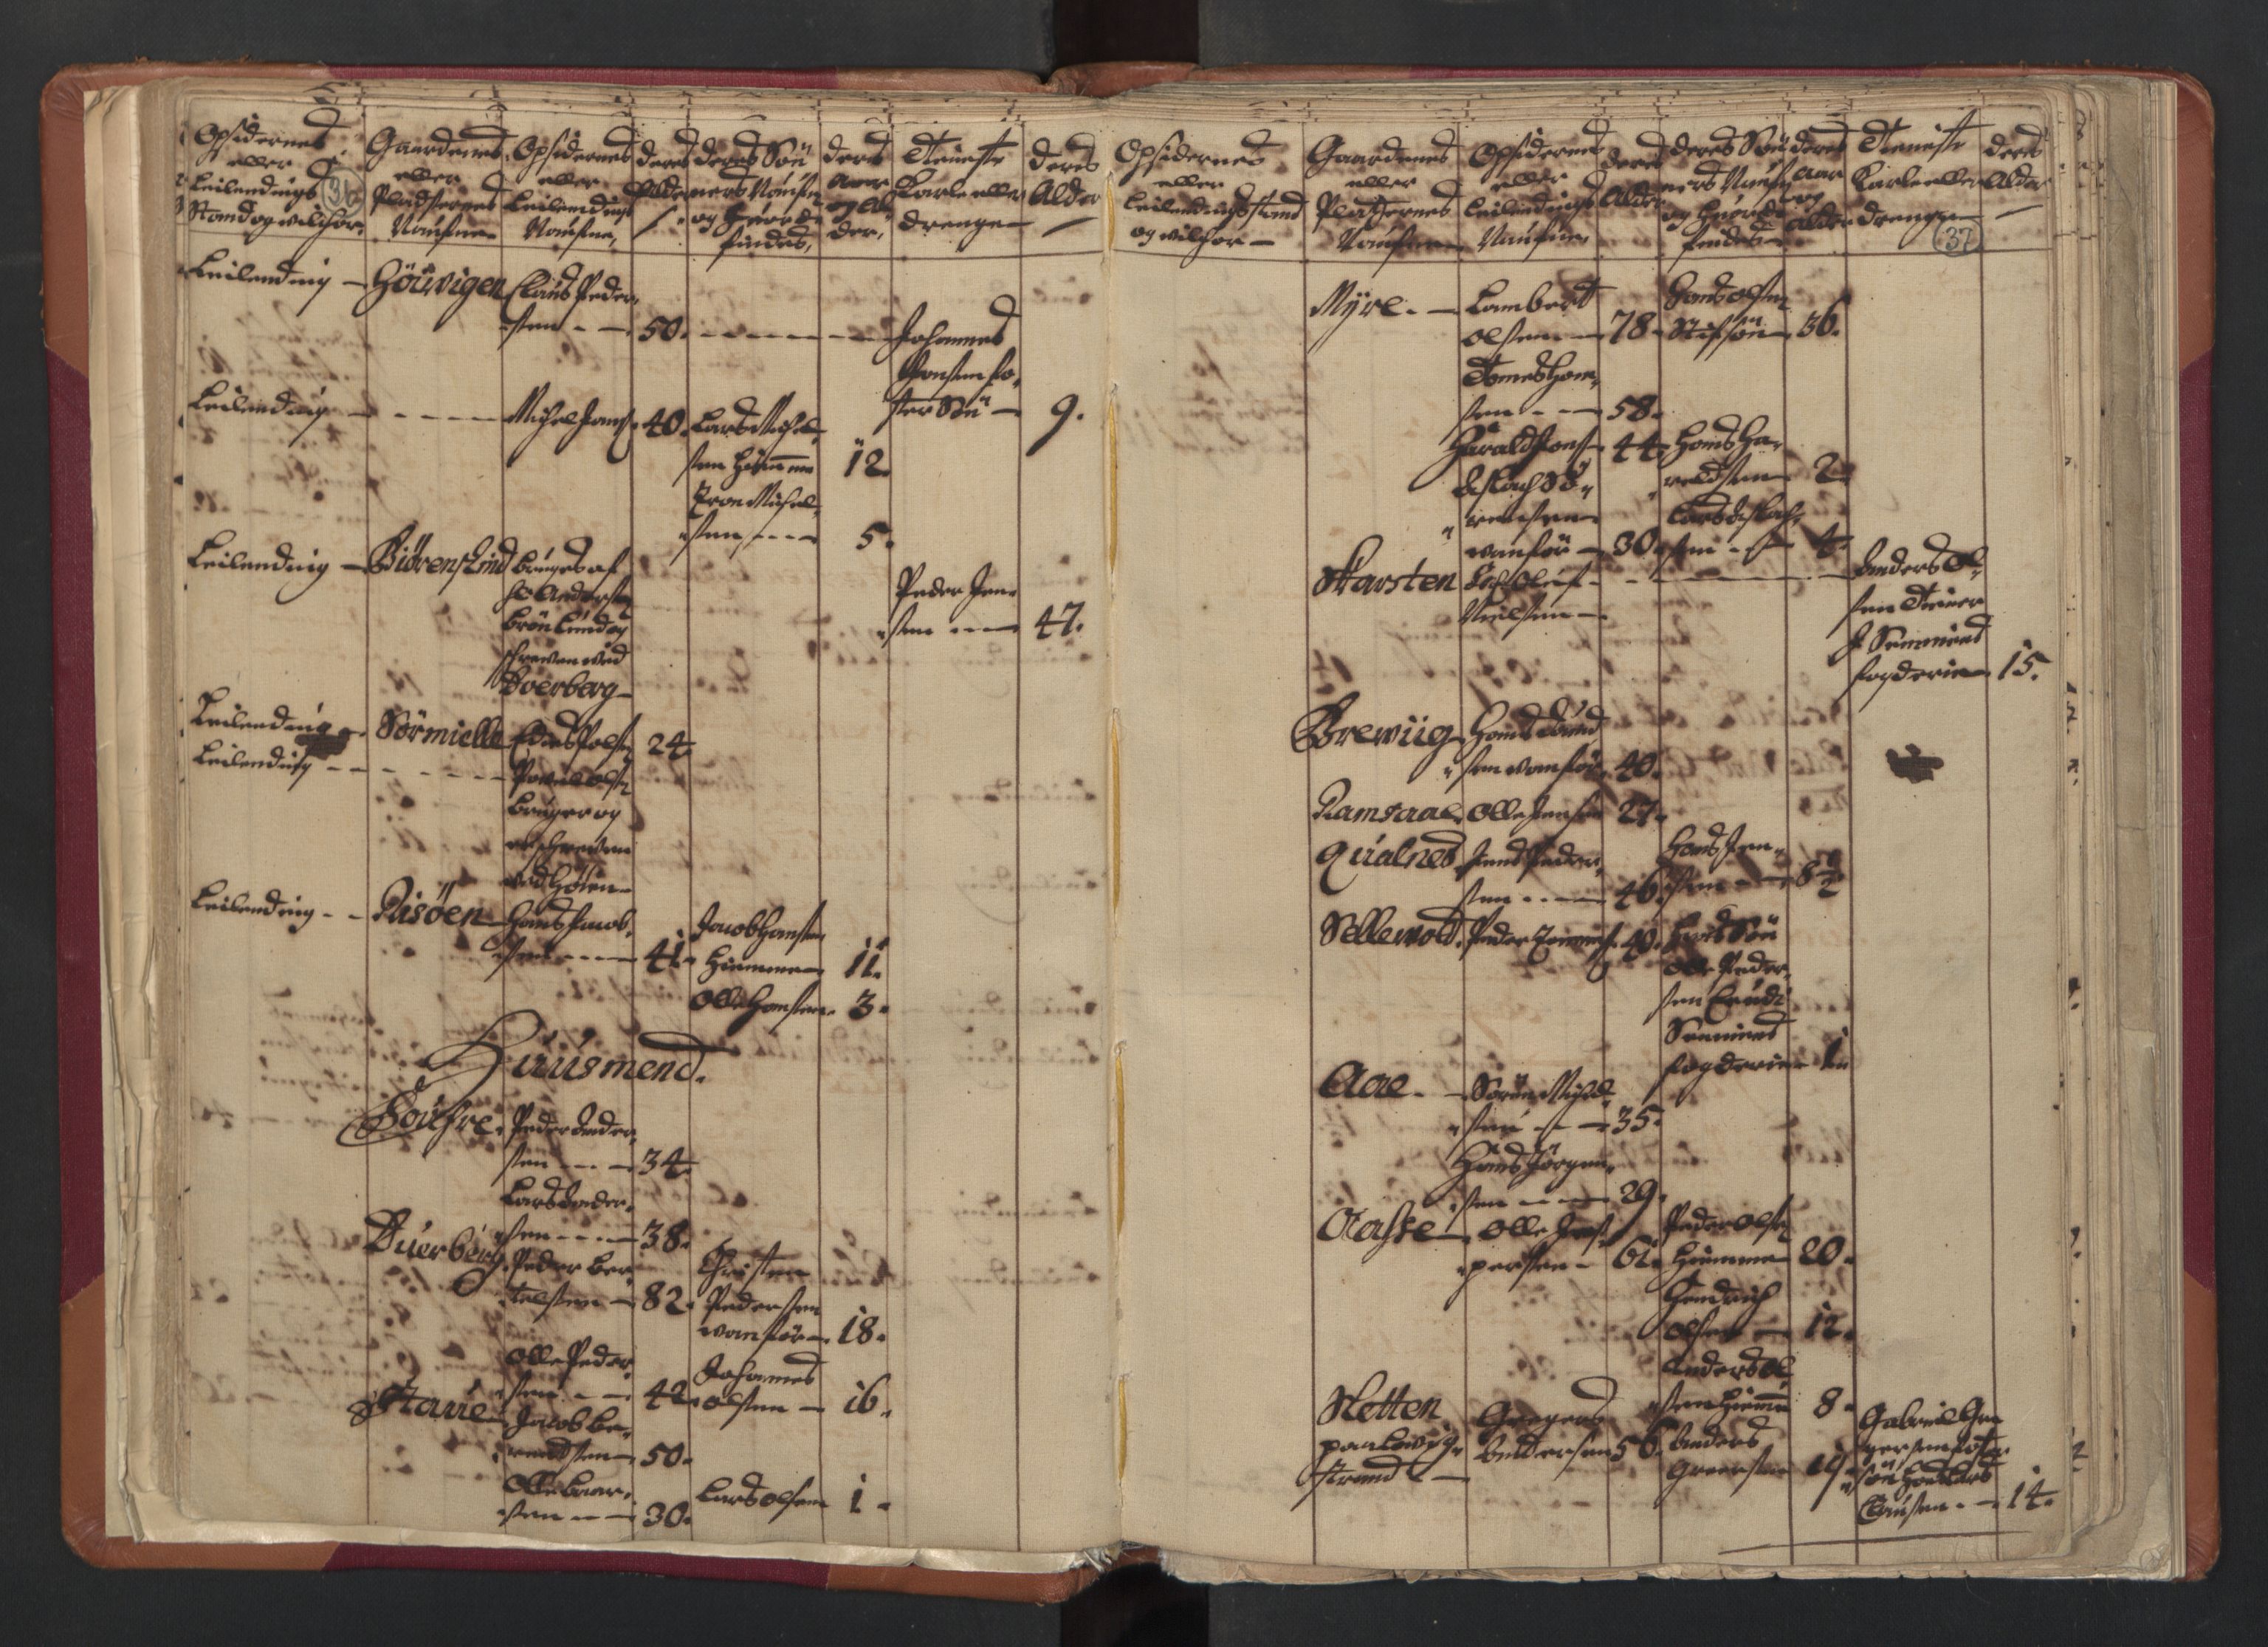 RA, Manntallet 1701, nr. 18: Vesterålen, Andenes og Lofoten fogderi, 1701, s. 36-37